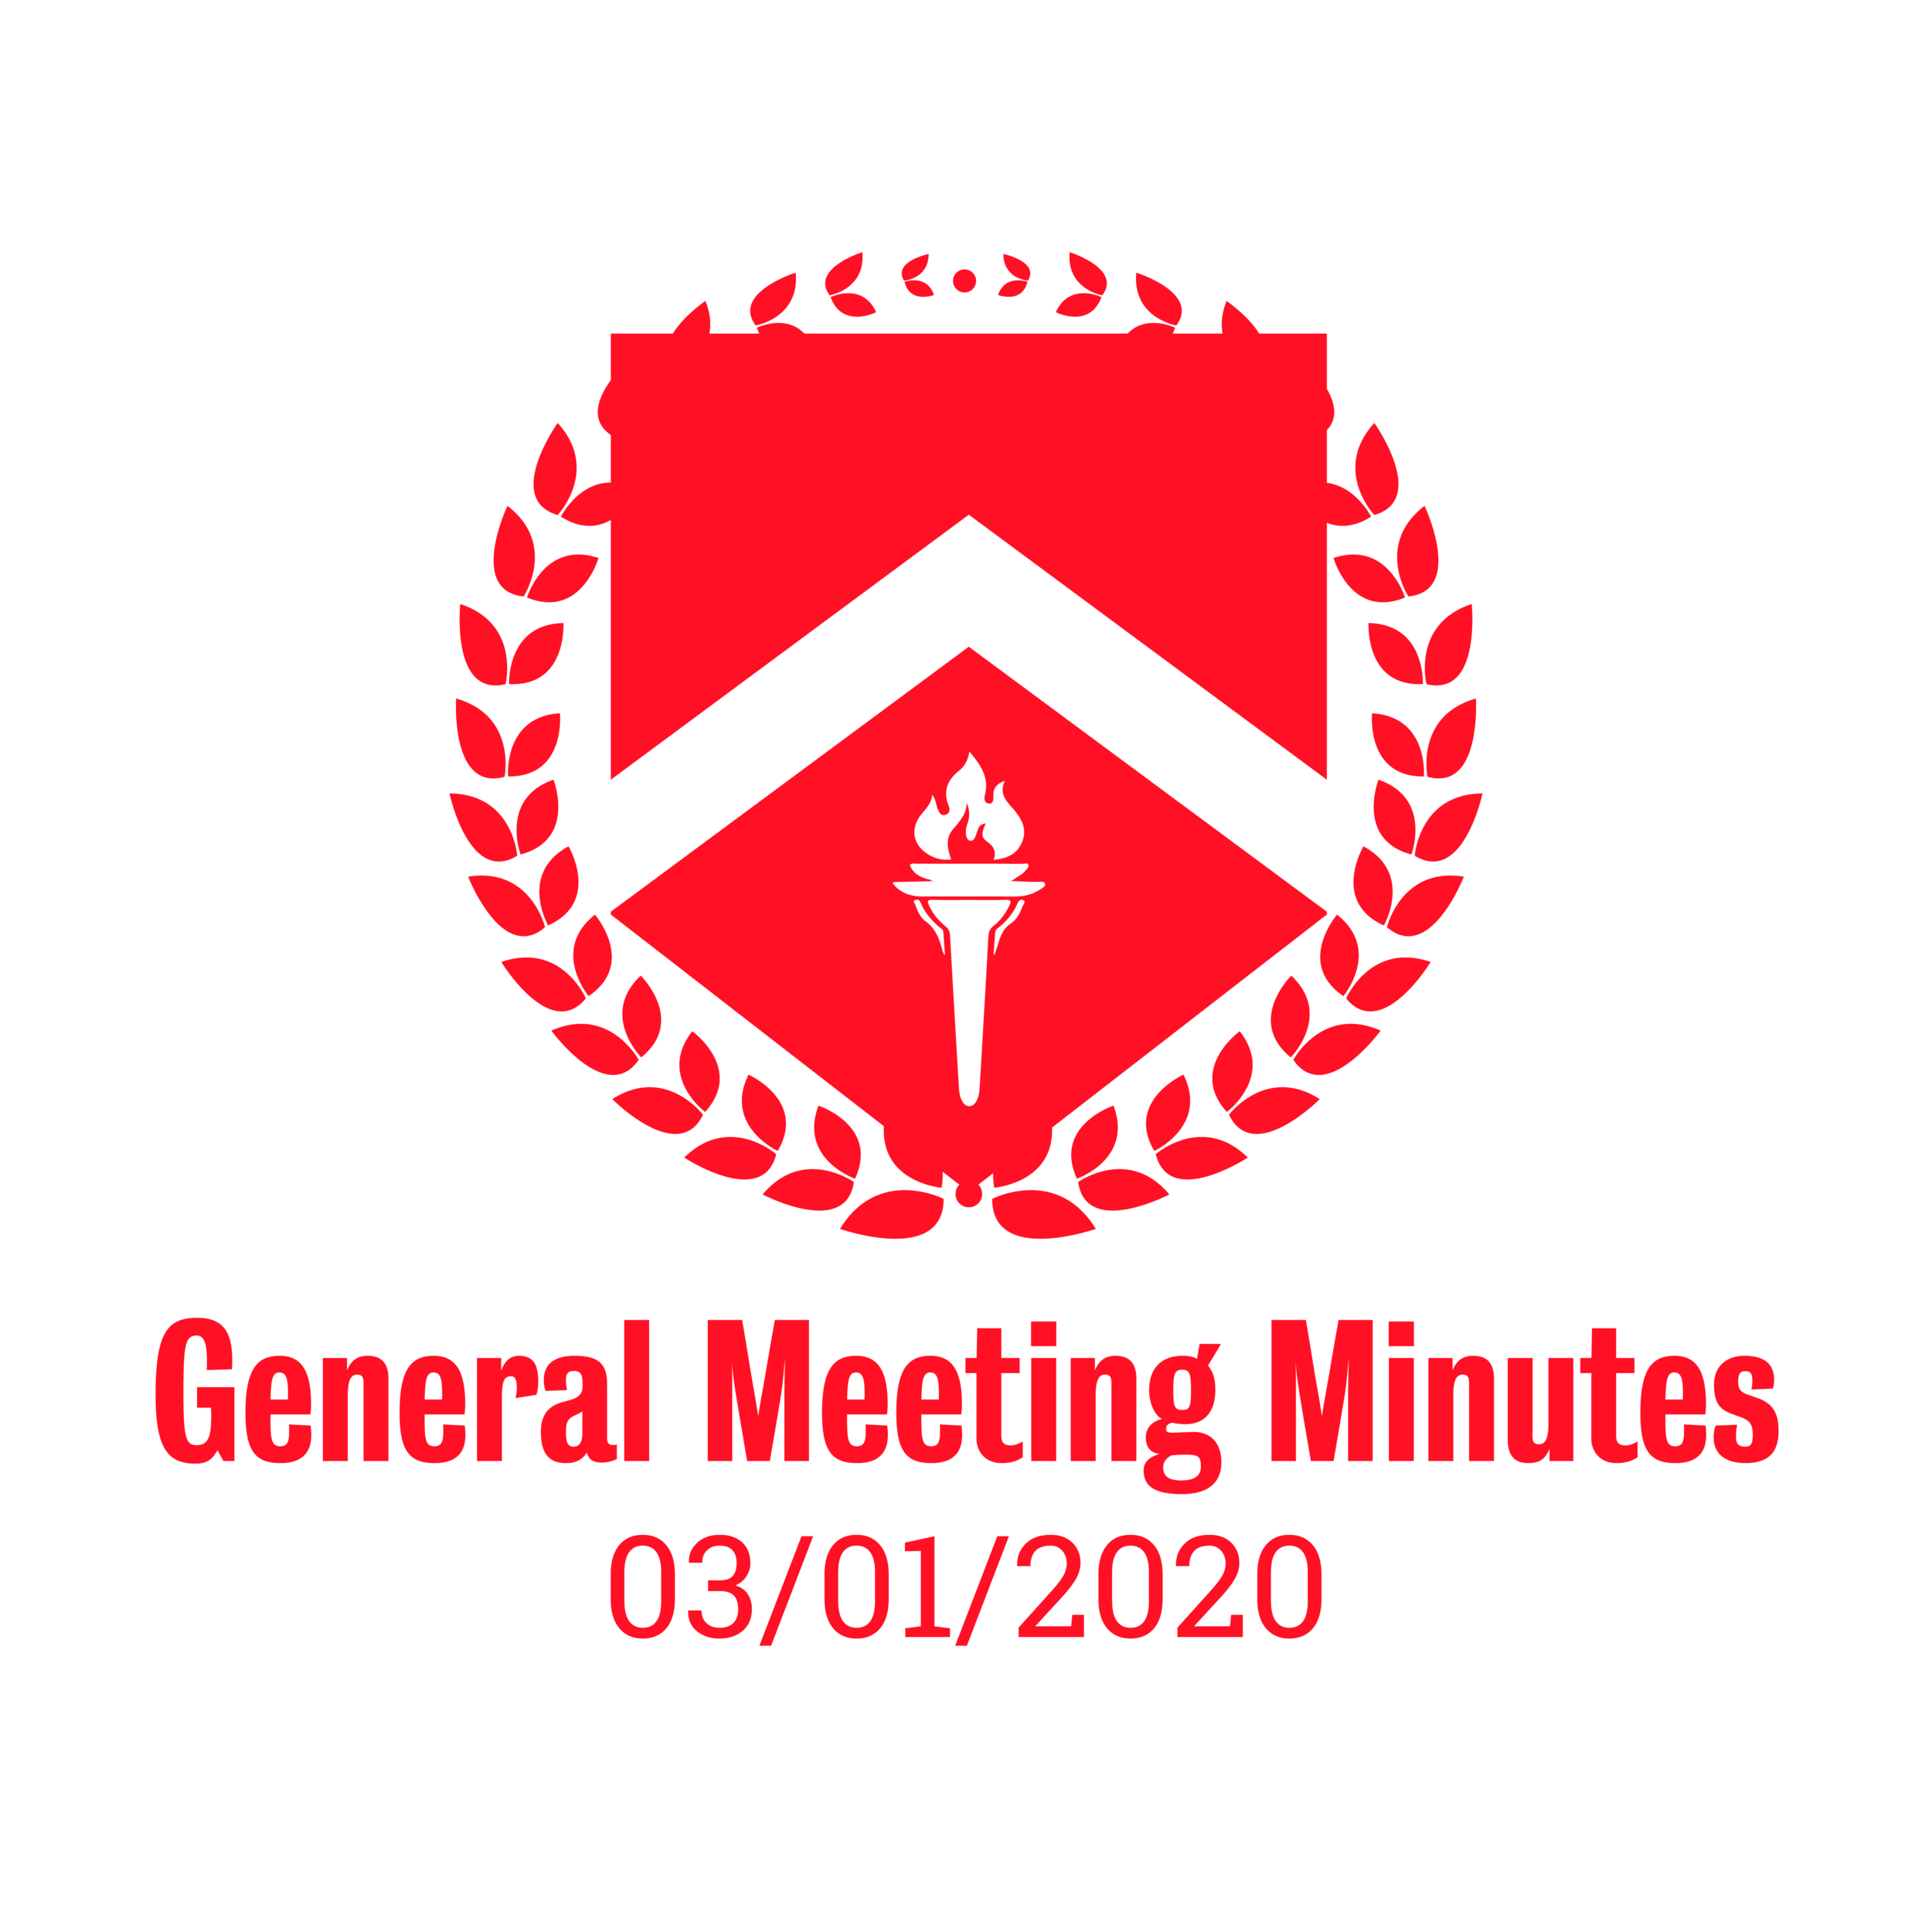 General Meeting Minutes 03/01/2020